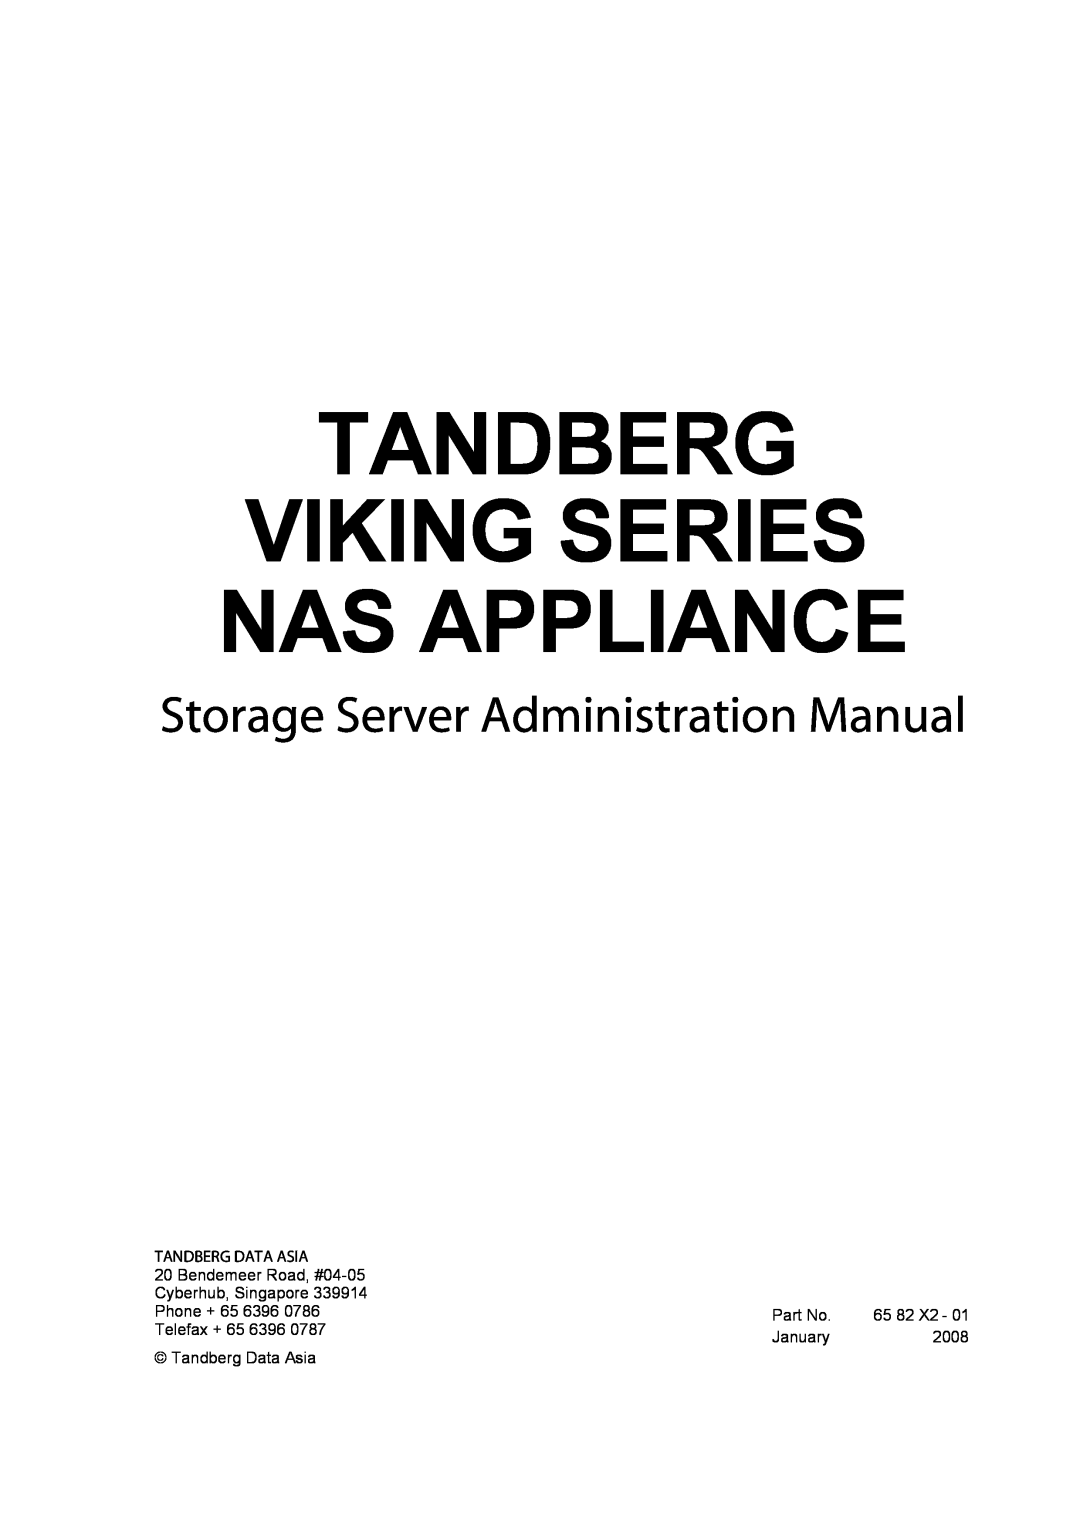 Tandberg Data Viking FS-1500 manual Tandberg, Viking Series Nas Appliance, Storage Server Administration Manual, January 